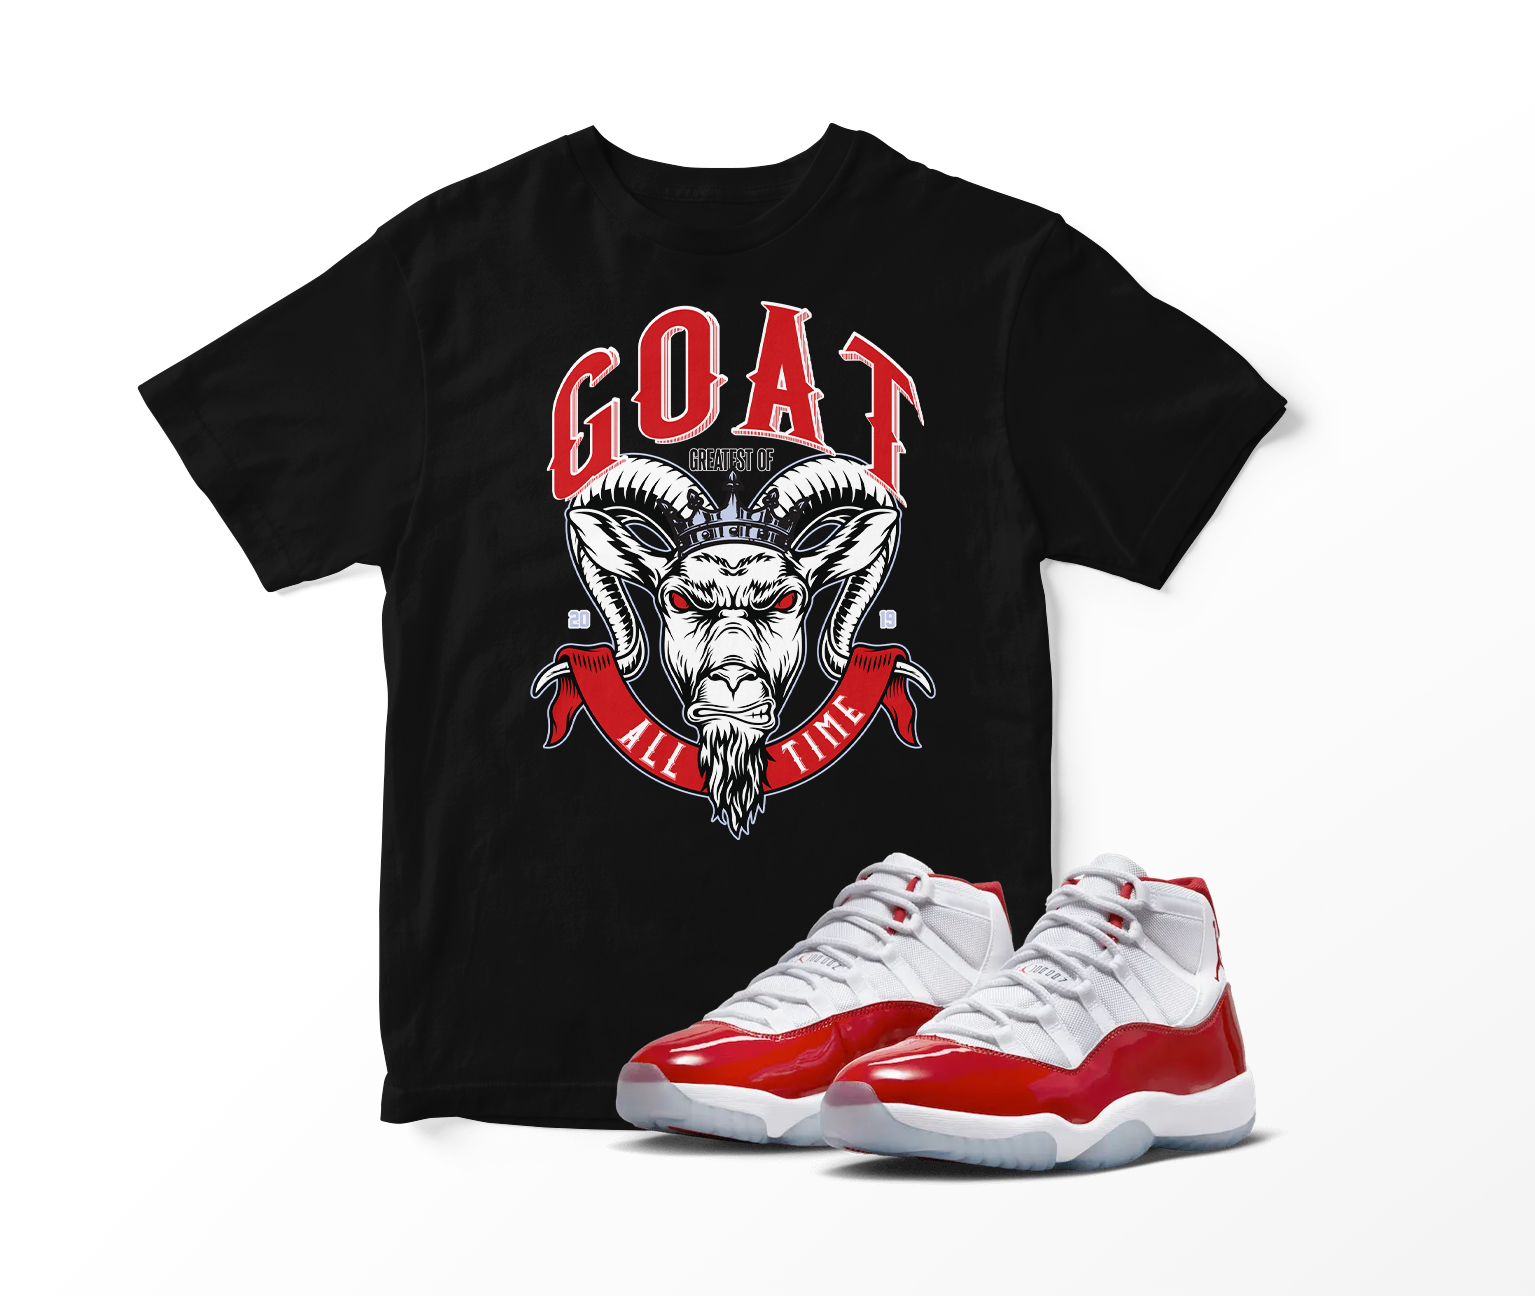 'GOAT' Custom Graphic Short Sleeve T-Shirt To Match Air Jordan 11 Cherry Red